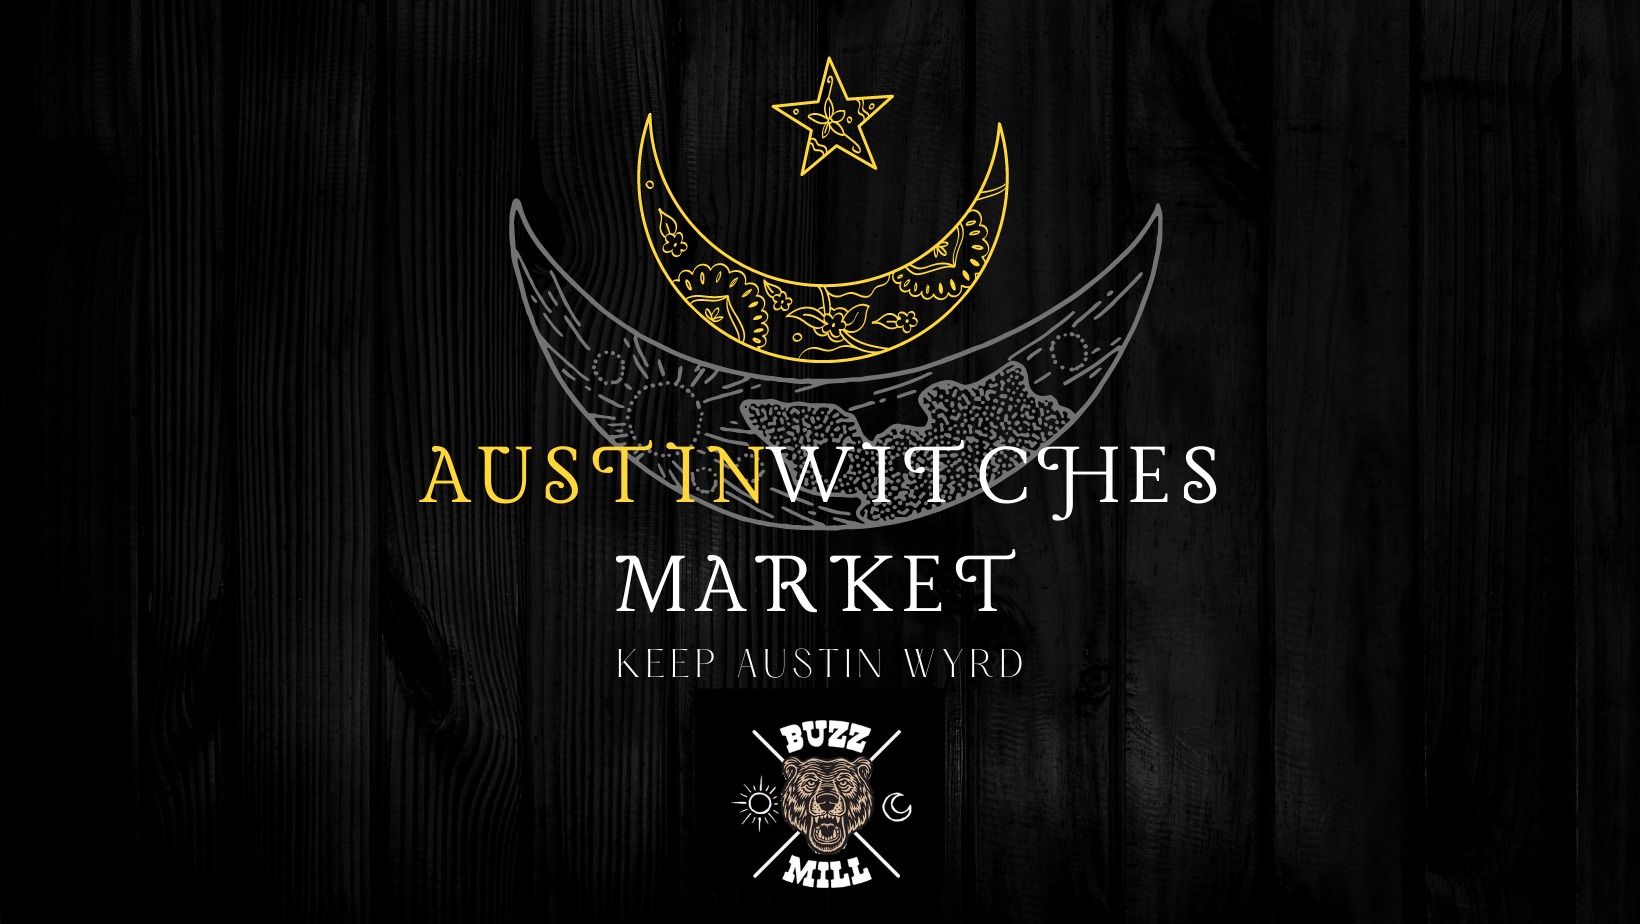 Austin Witches Market @ Buzz Mill